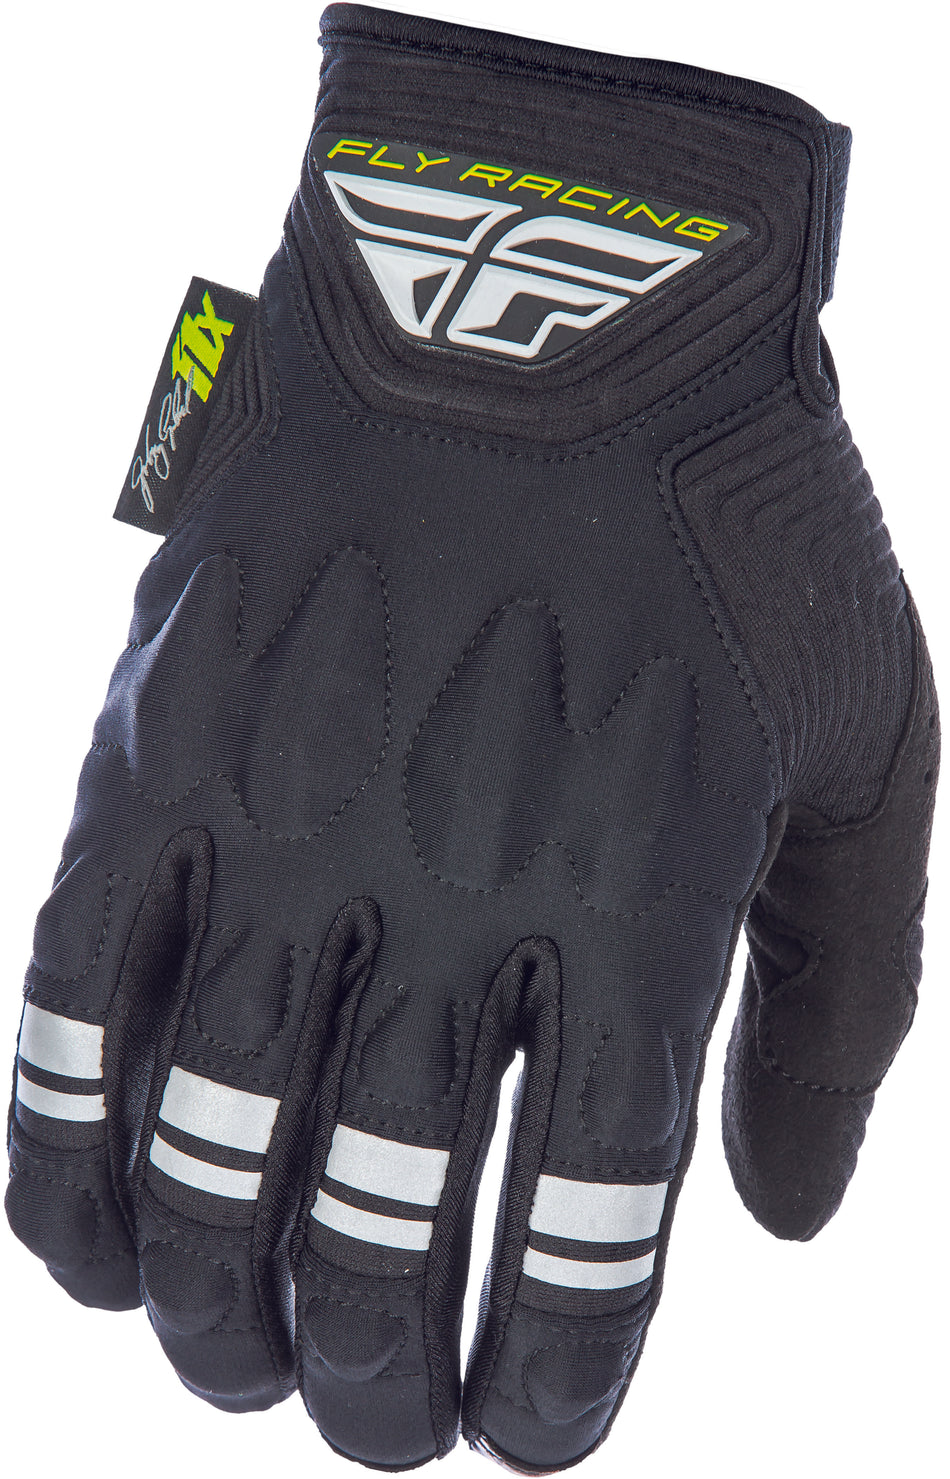 FLY RACING Johnny Campbell Sig Patrol Xc Lite Gloves Black/Grey 370-68010